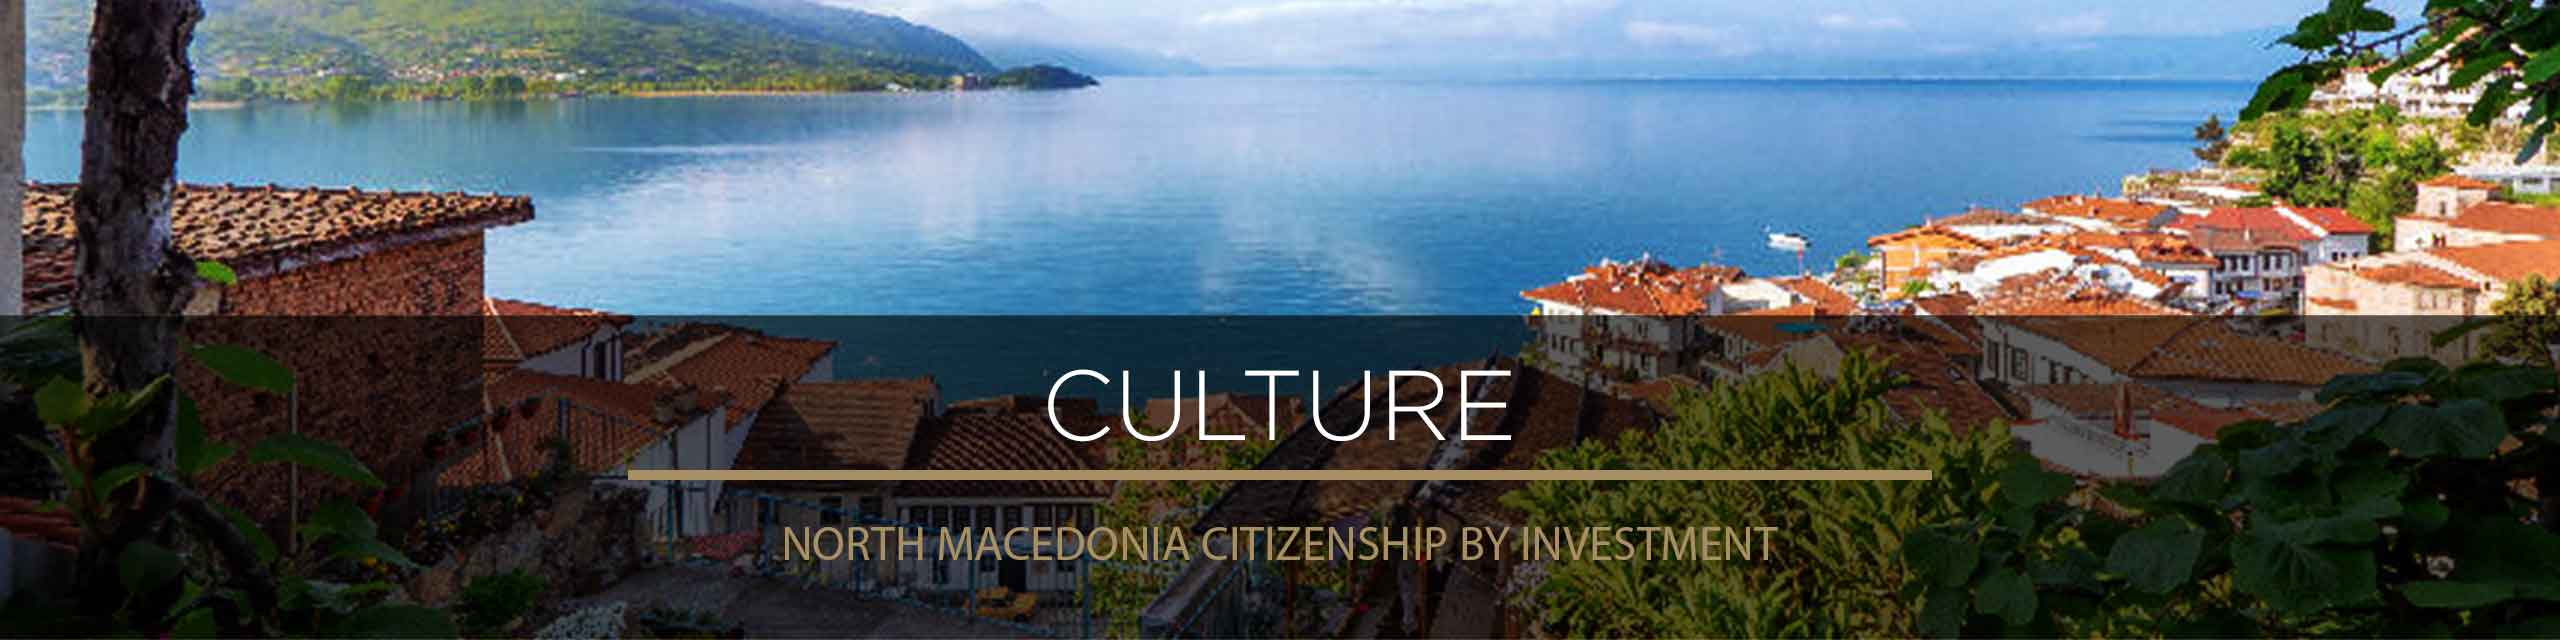 North Macedonia Culture